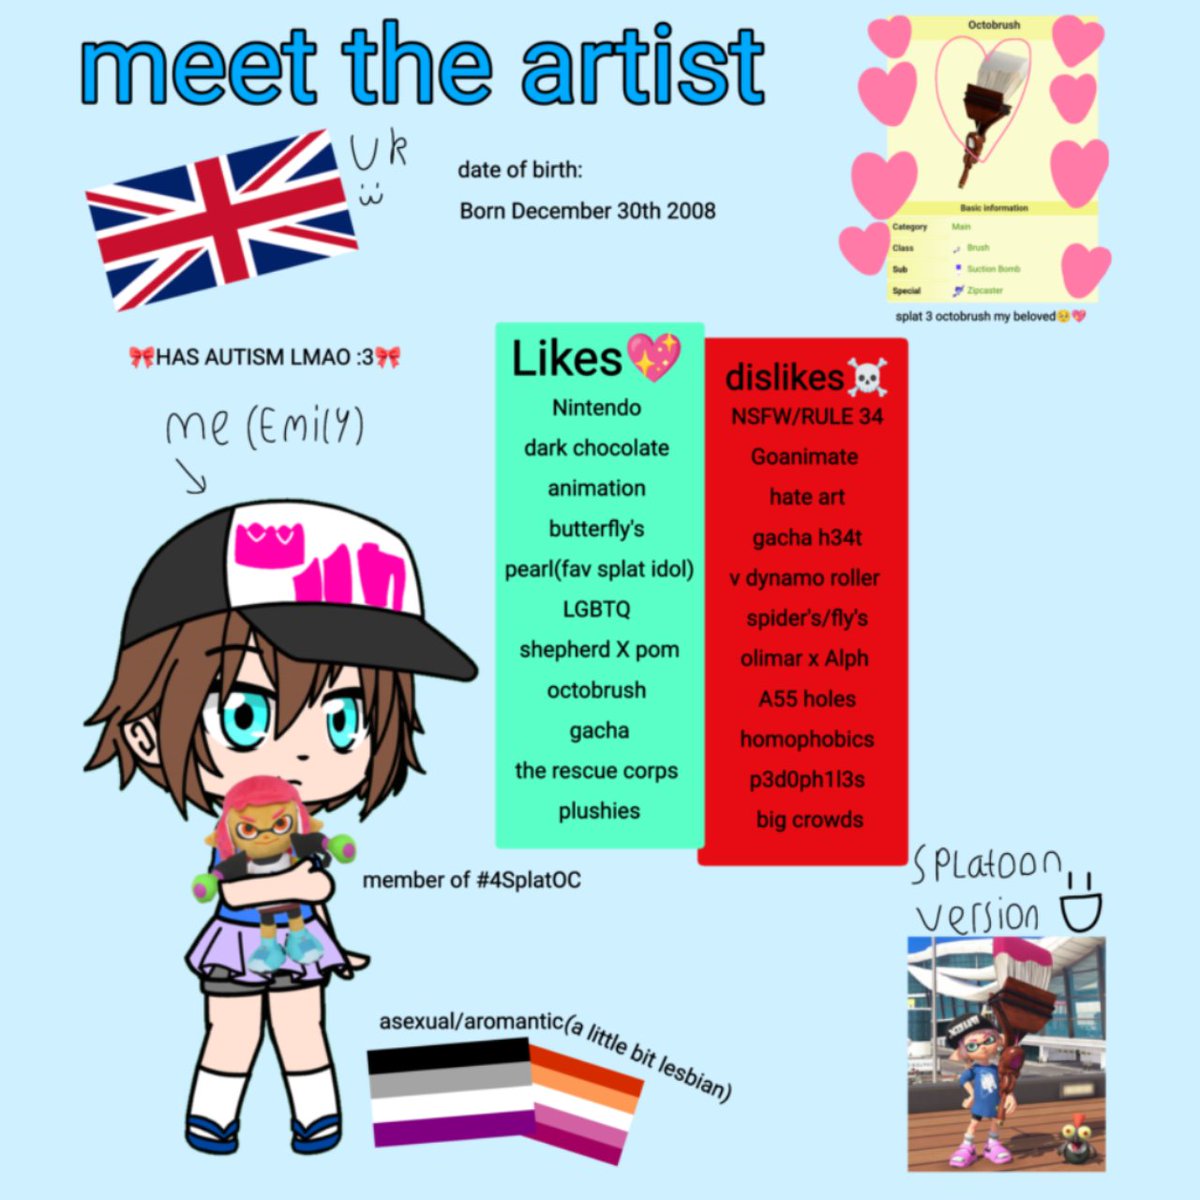 Meet the artist 🩵💖🎀 :D
❤️&♻️ Are Free
#Splatoon3 #MeetTheArtist #Pikmin4 #SFW #GachaClub #4SplatOC #Artist